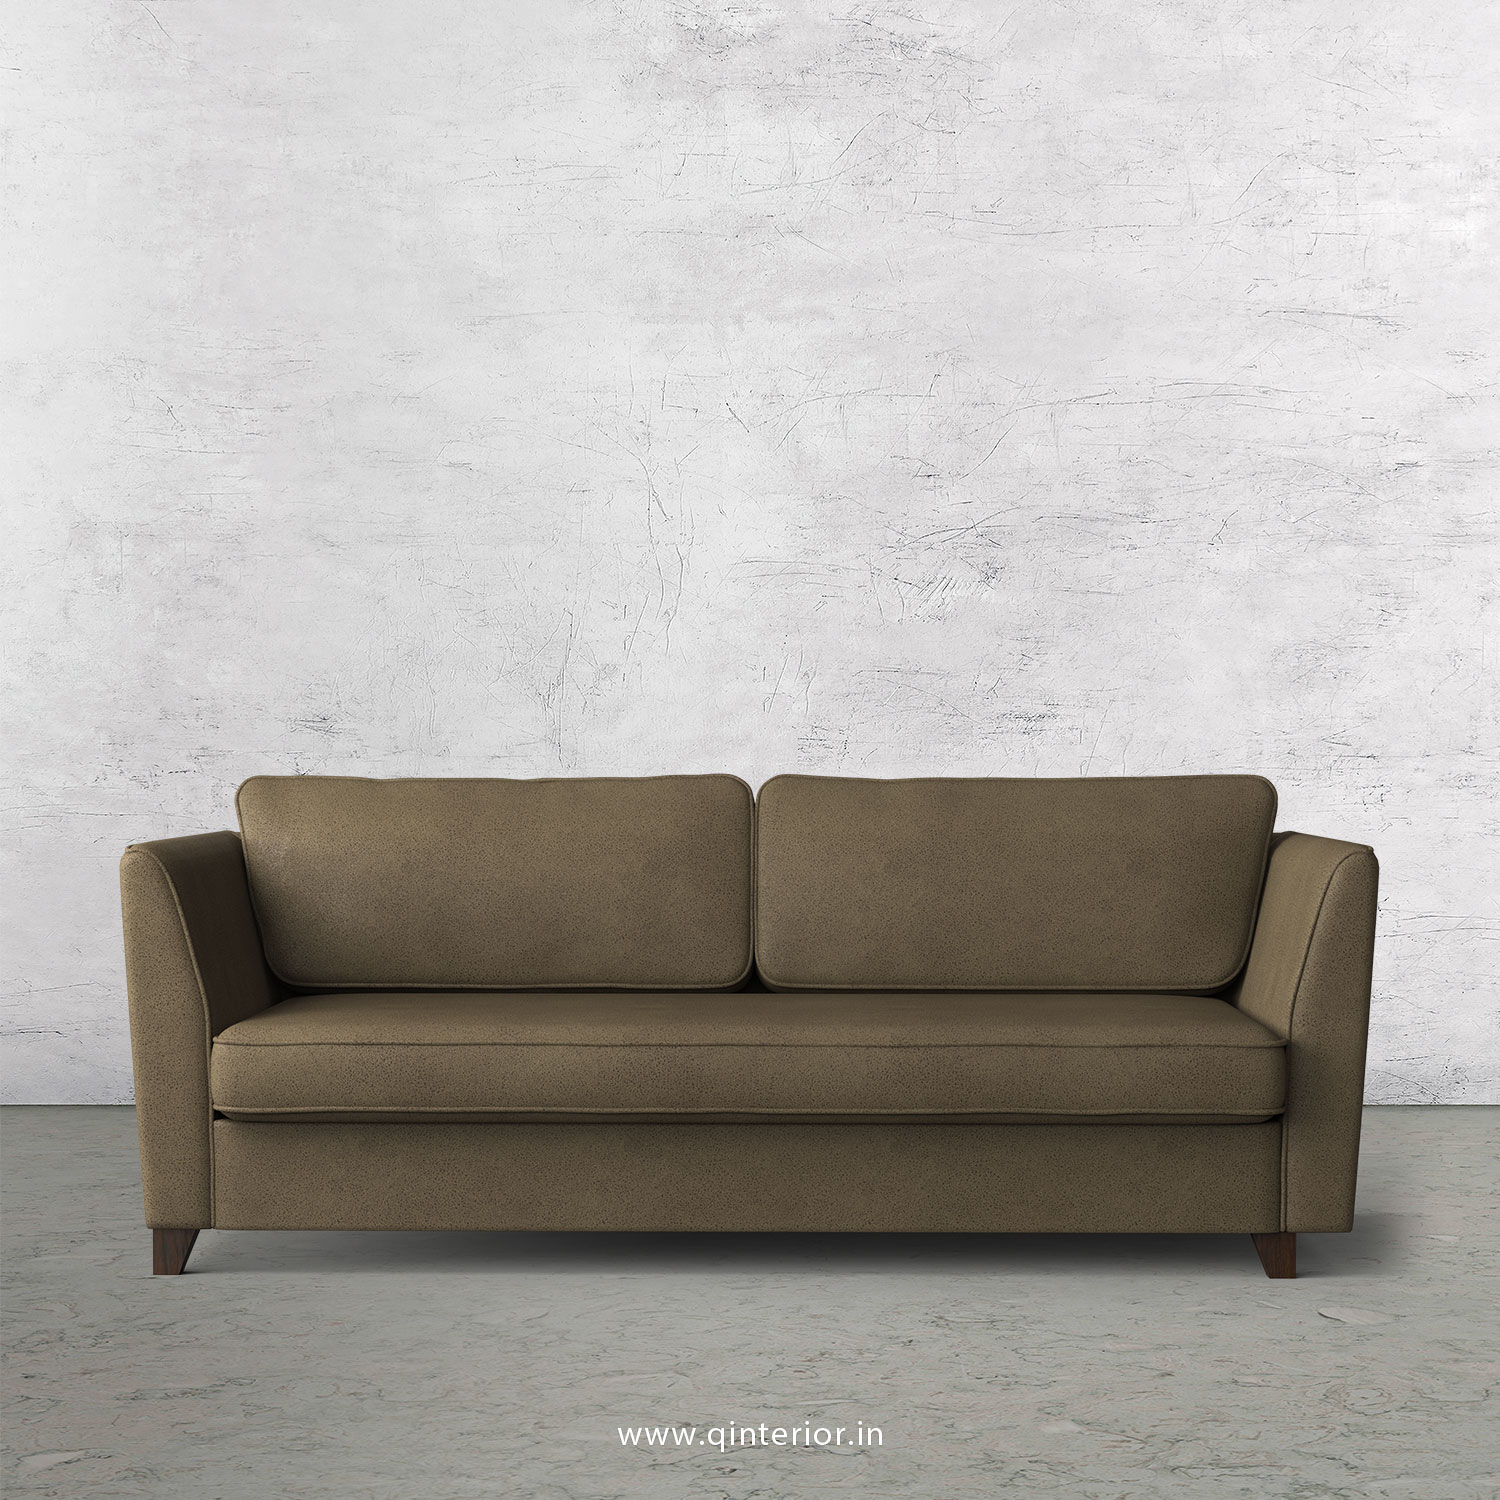 KINGSTONE 3 Seater Sofa in Fab Leather Fabric - SFA004 FL06